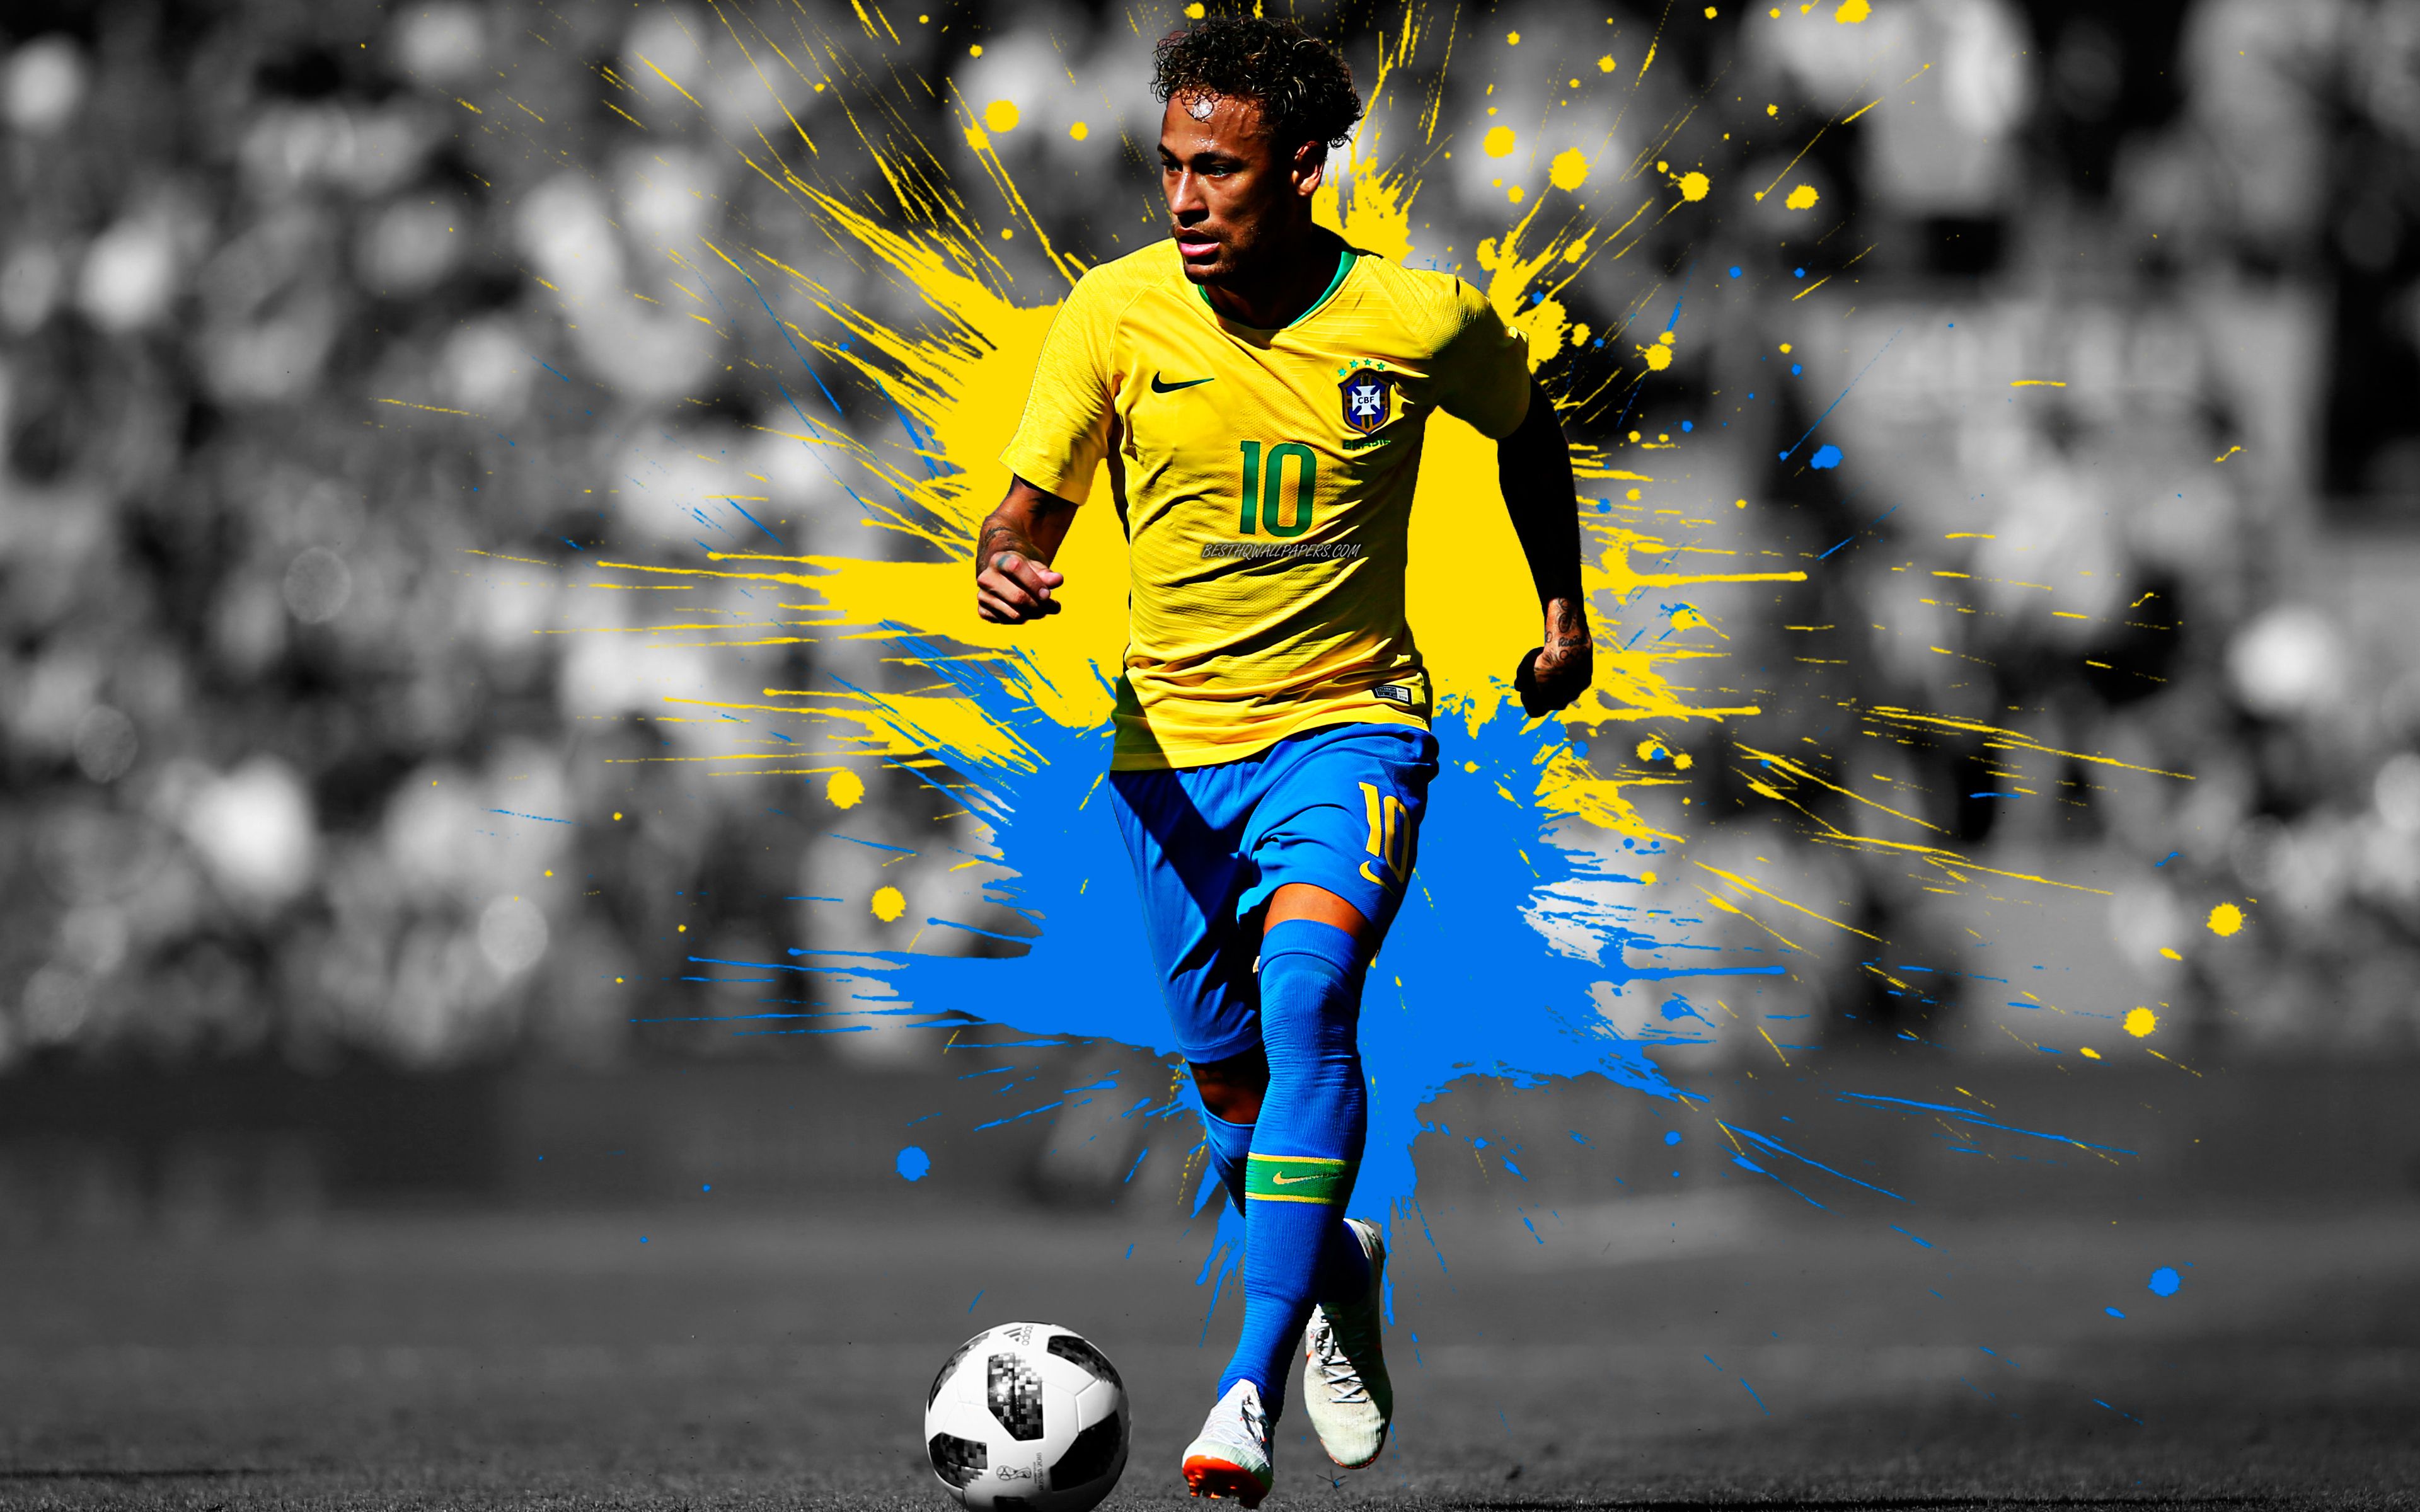 Free download Neymar Jr Brazil 4k Ultra HD Wallpaper Background Image [3840x2400] for your Desktop, Mobile & Tablet. Explore Brazil 2019 Wallpaper. Brazil 2019 Wallpaper, Brazil Wallpaper, Brazil Wallpaper